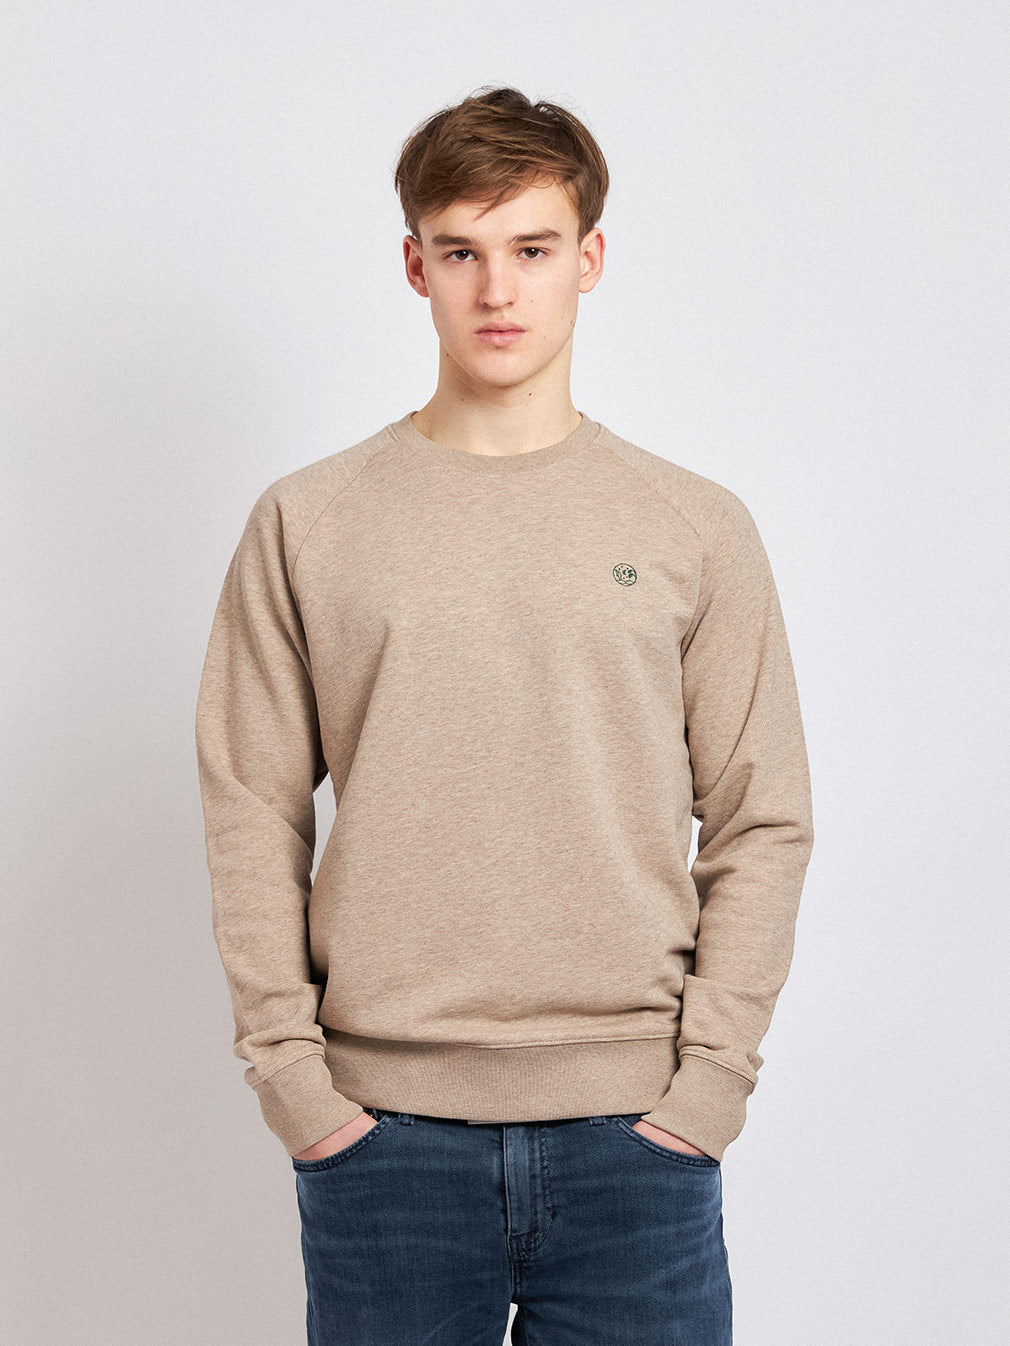 Central — Men's Sweatshirt - Youth Lagoon